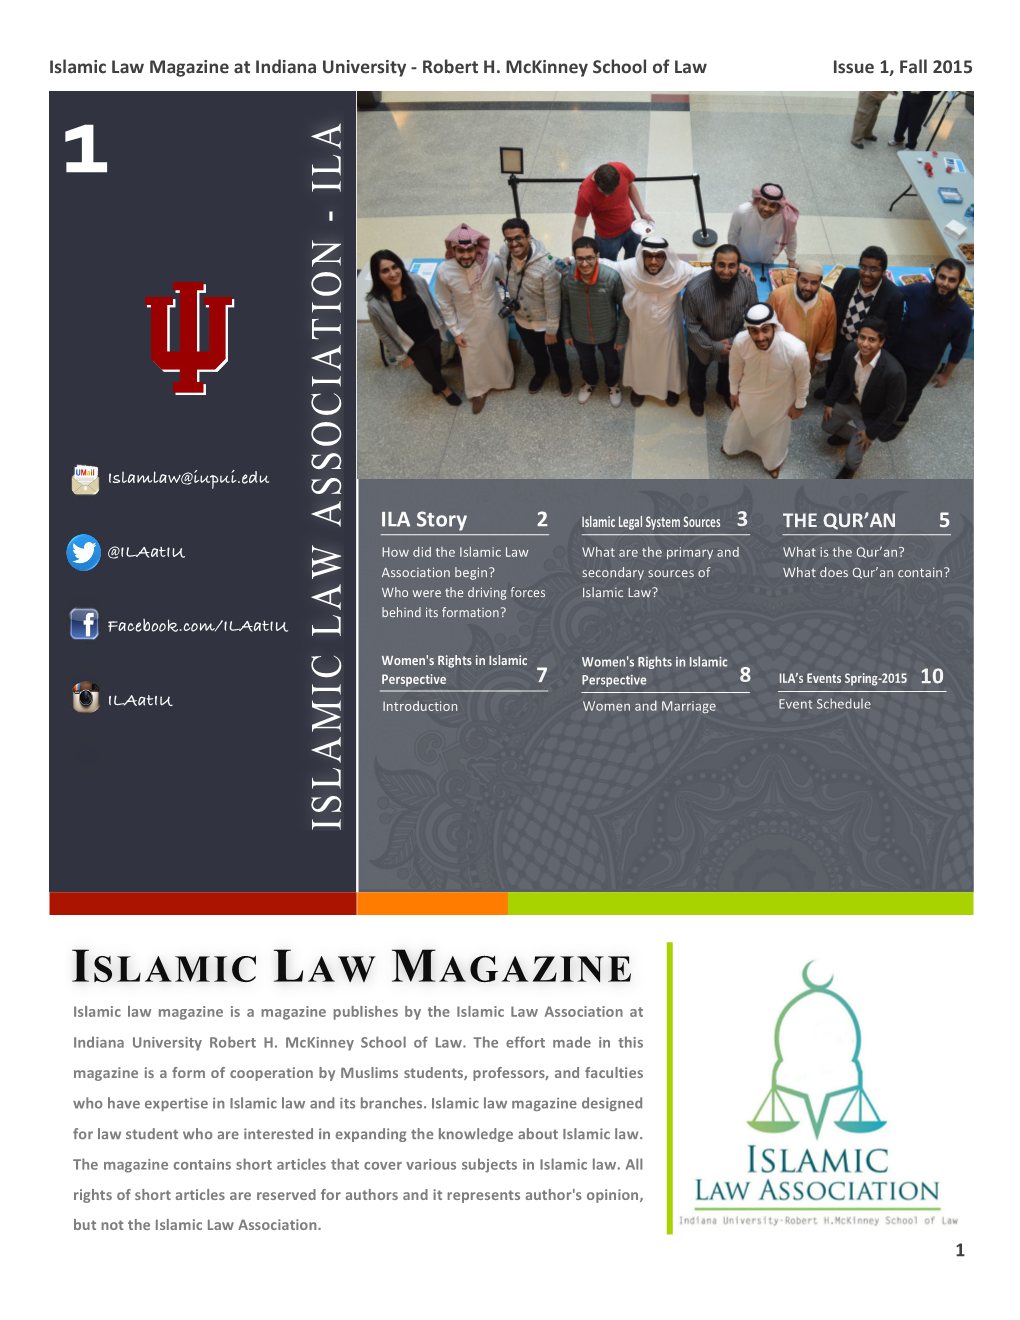 Islamic Law Magazine!